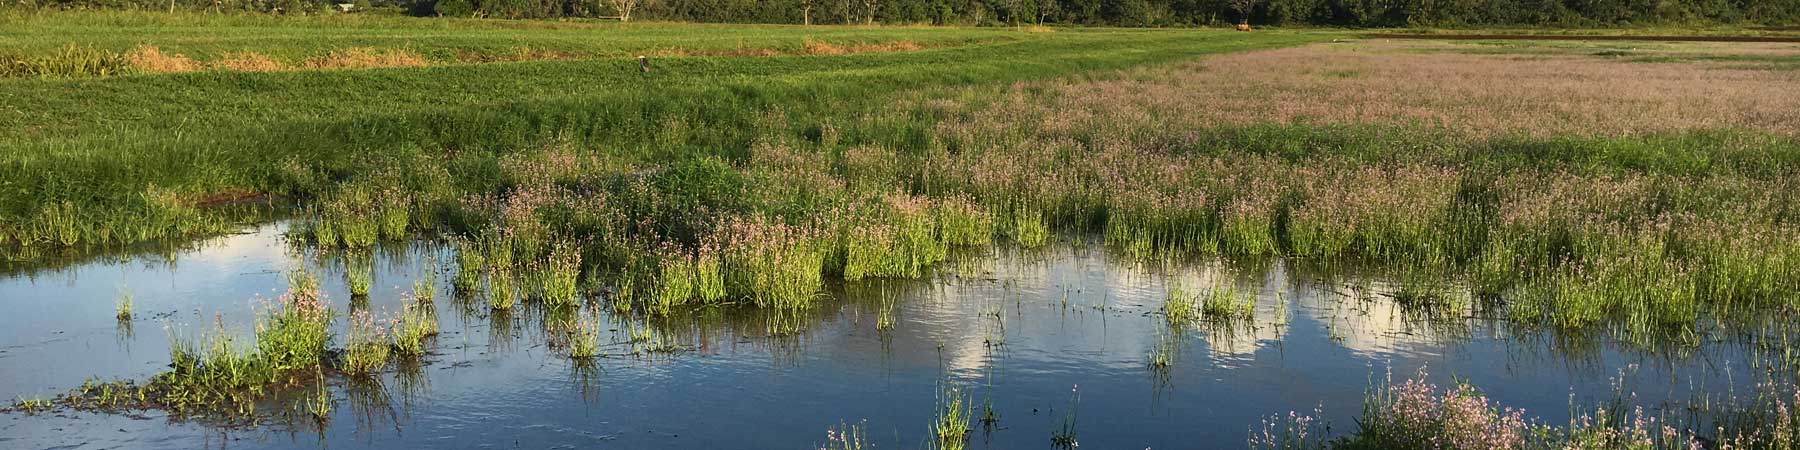 Wetland Conservation And Habitat